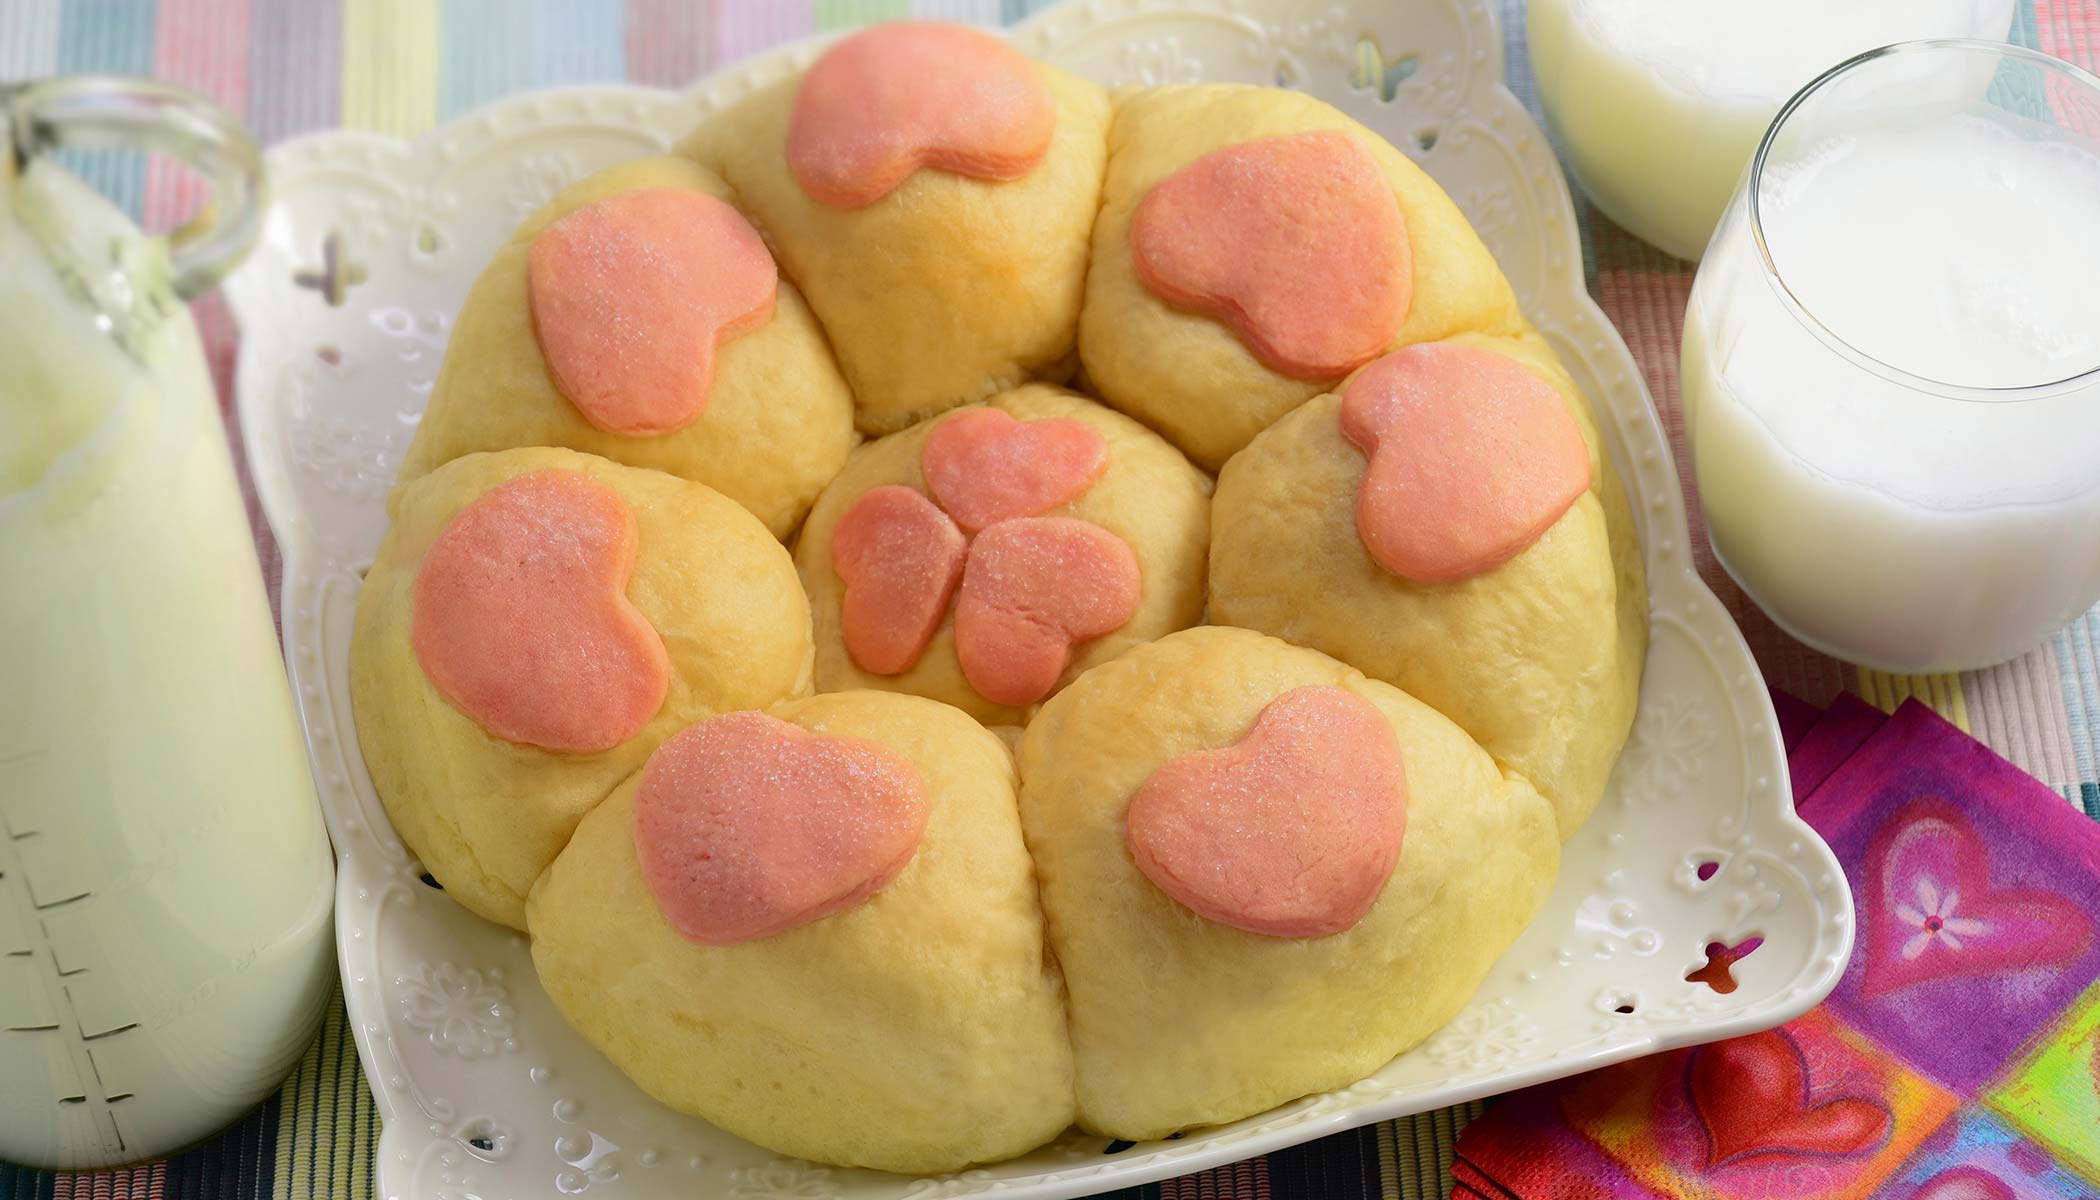 Zojirushi Recipe – Valentine's Tear and Share Bread